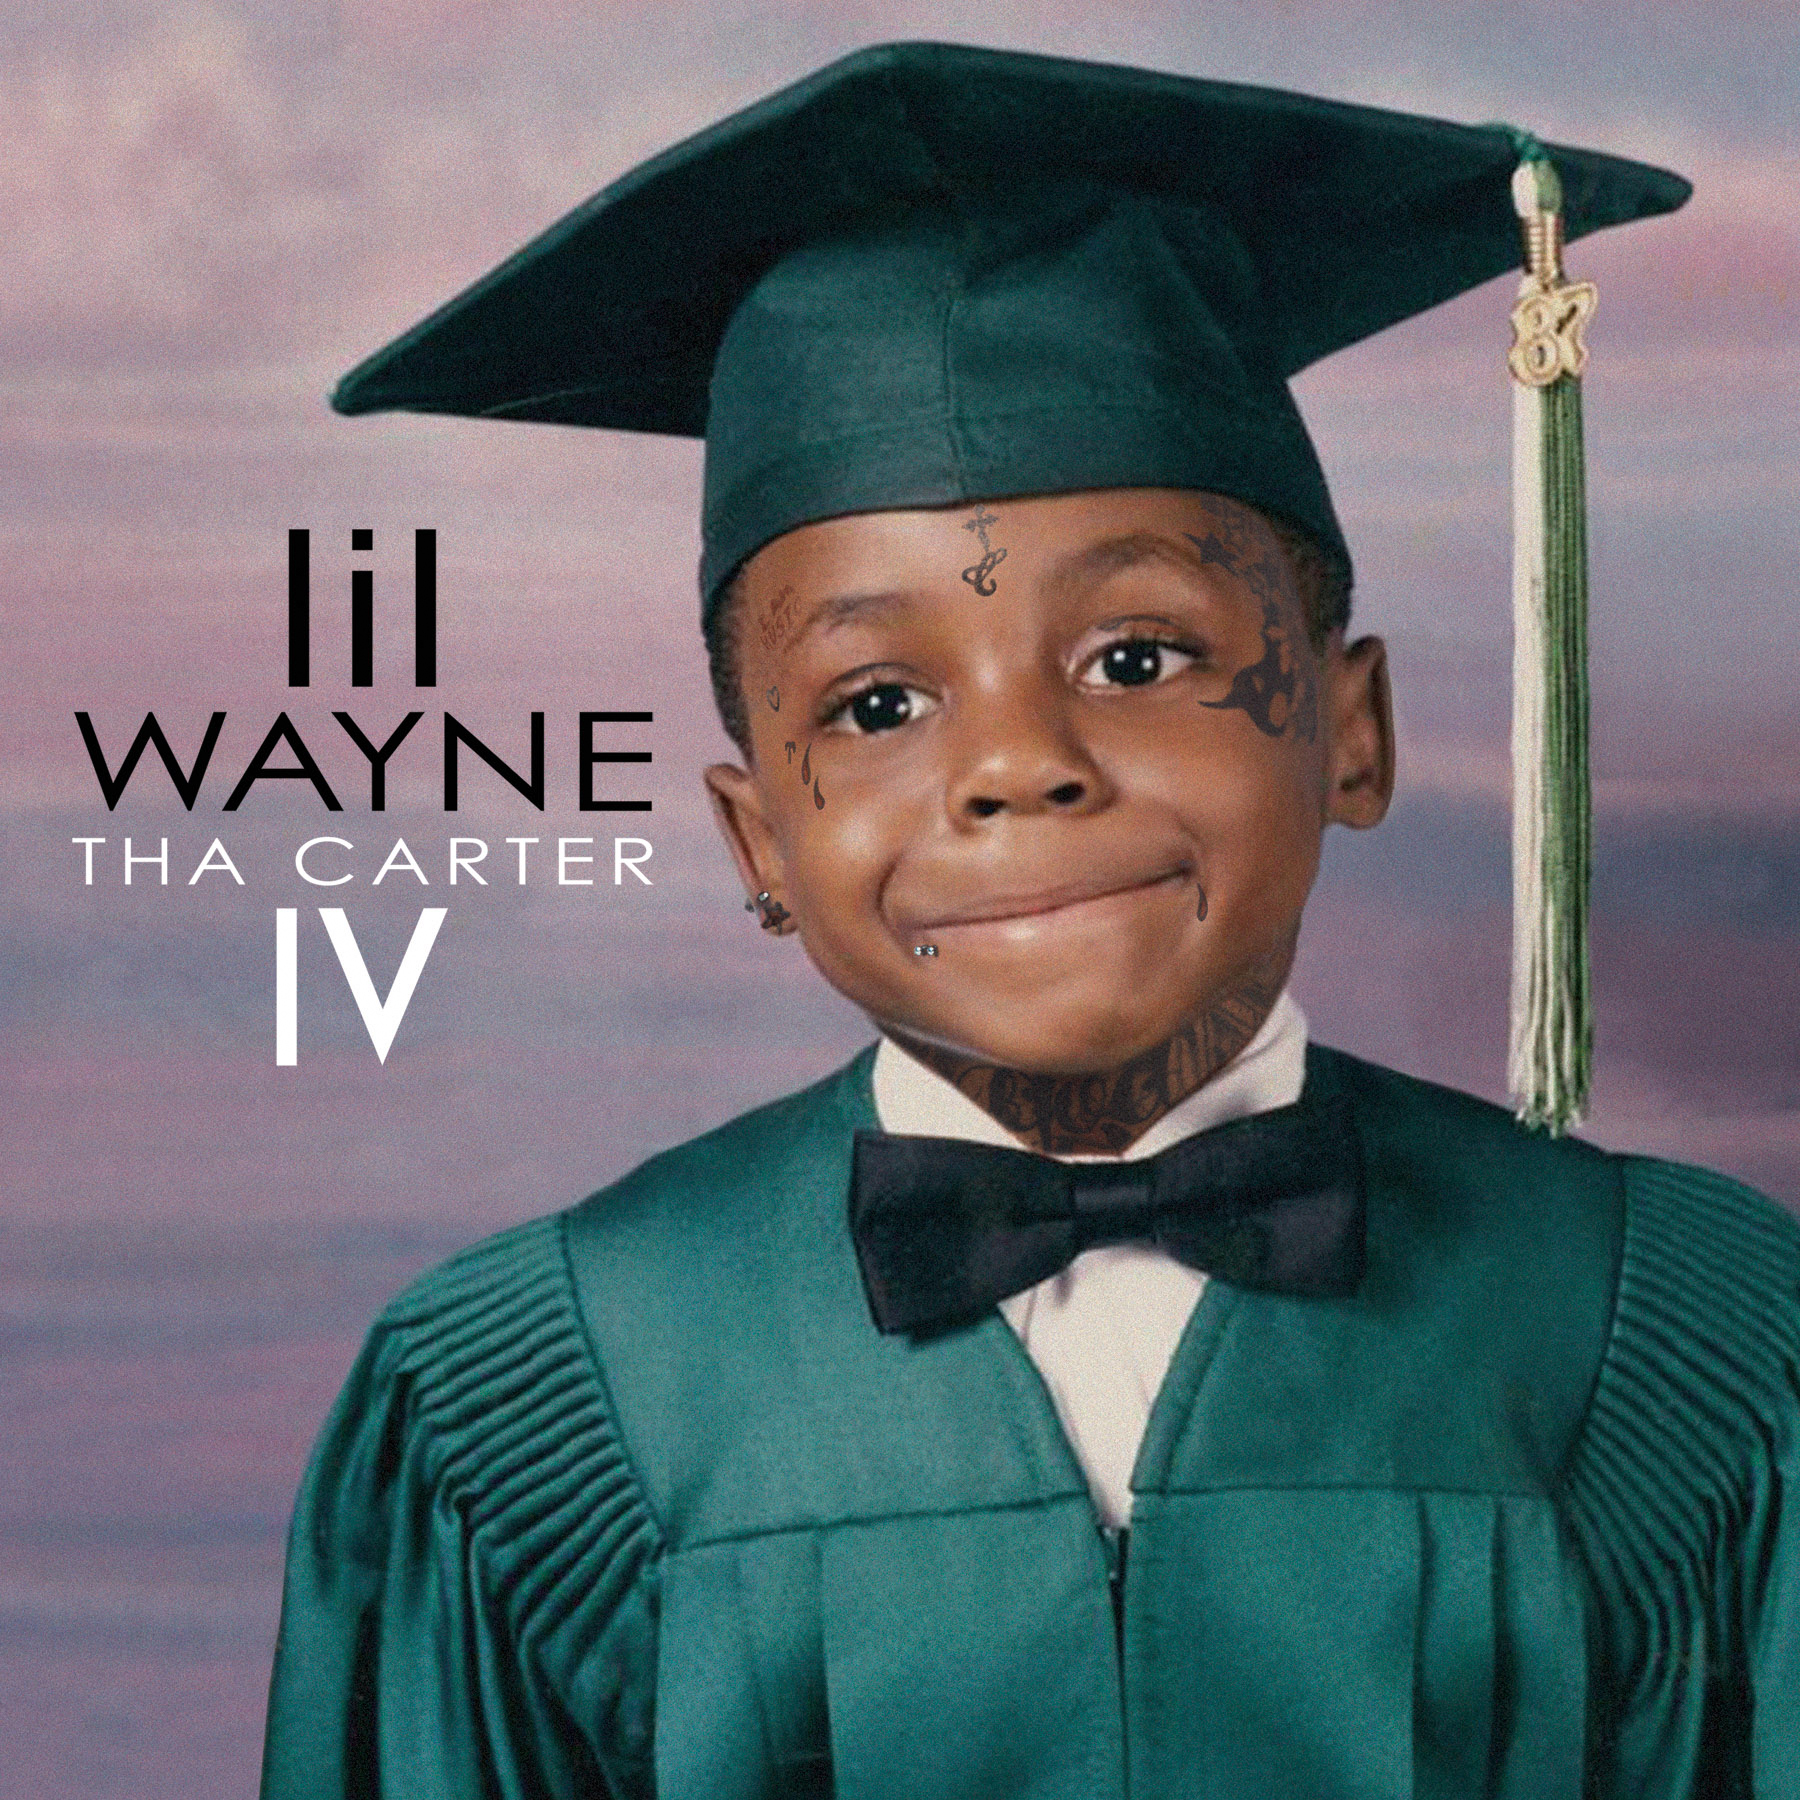 Lil Wayne Tha Carter IV